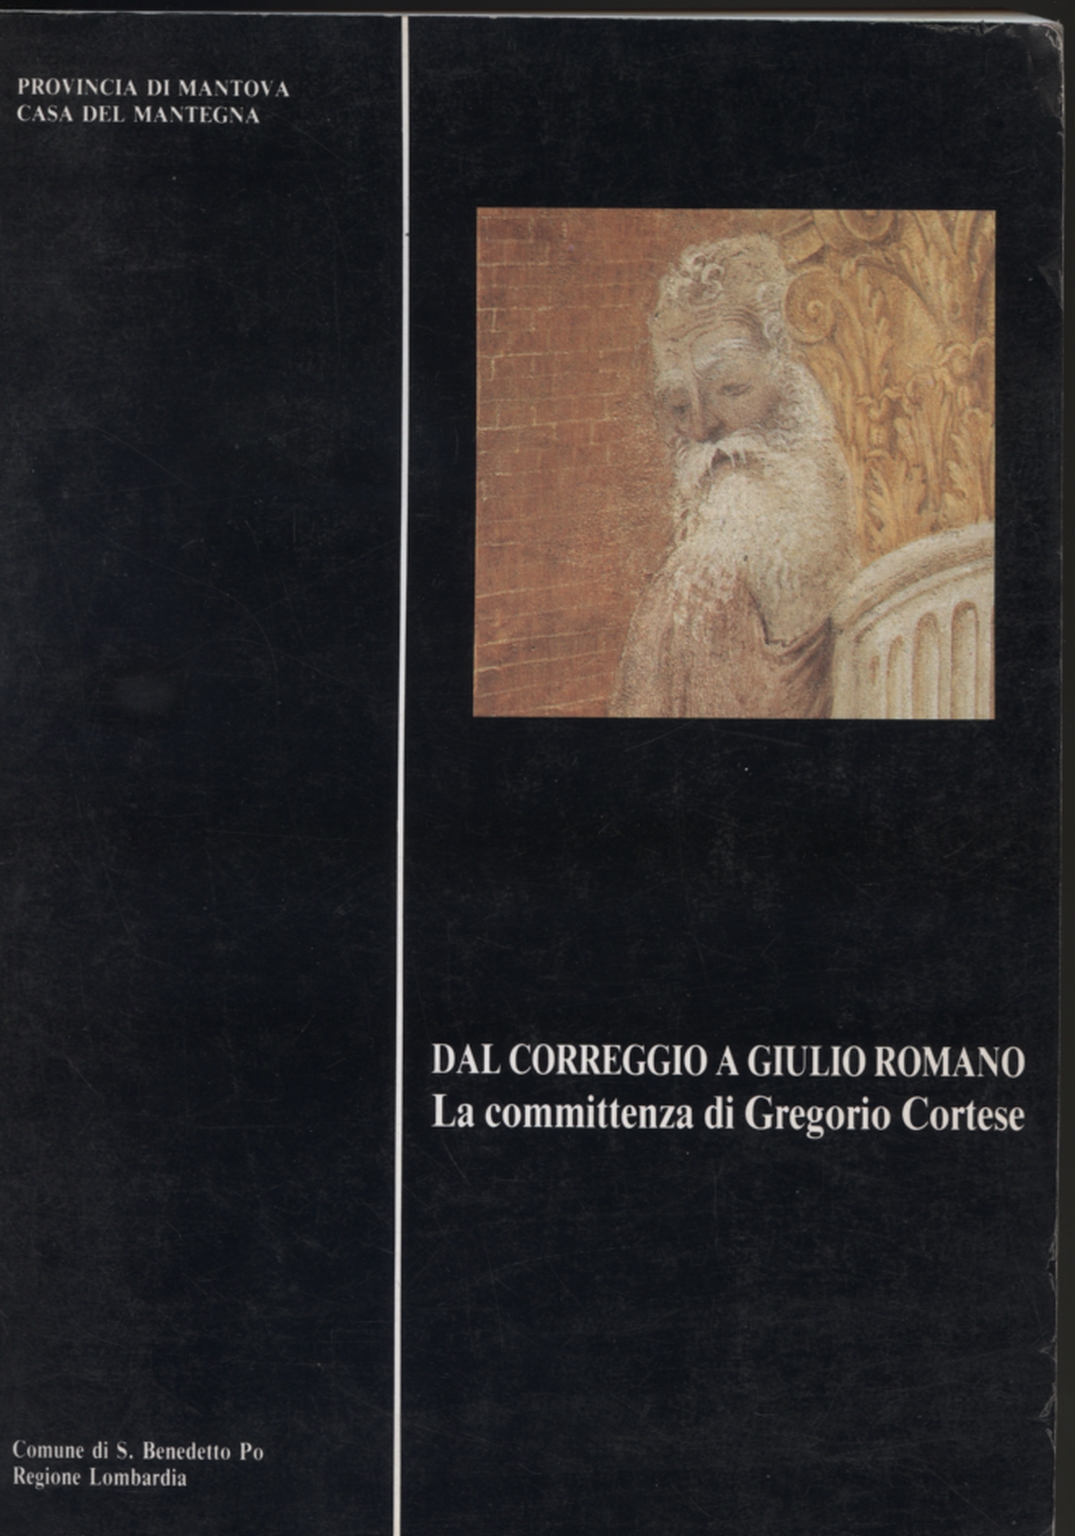 From Correggio to Giulio Romano paragraphs